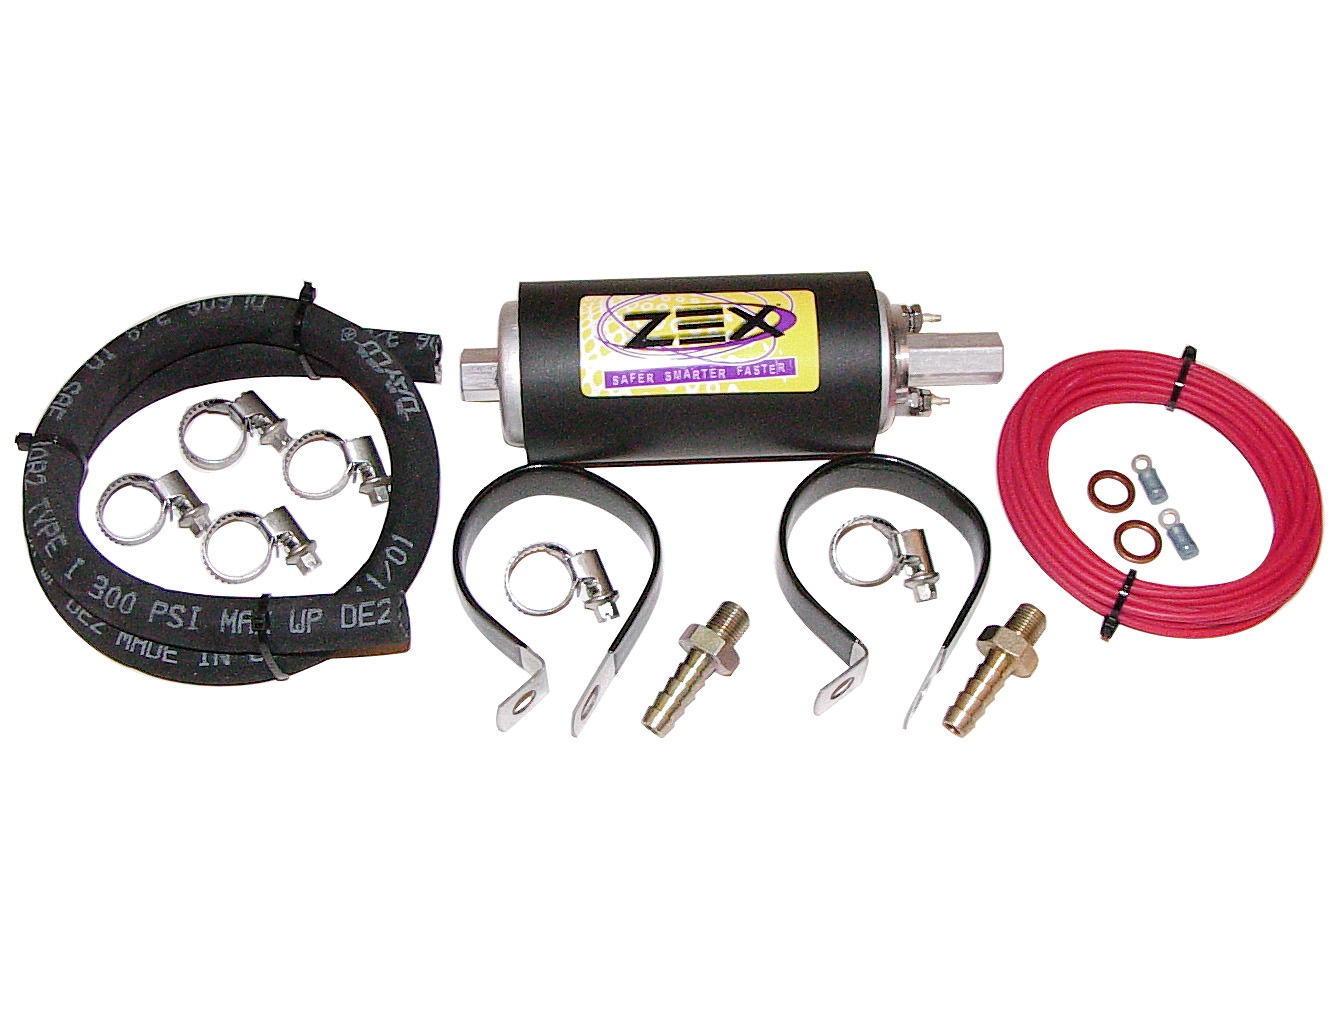 ZEX Booster Fuel Pump Kit, Pump Kit, Corvette, Camaro and others